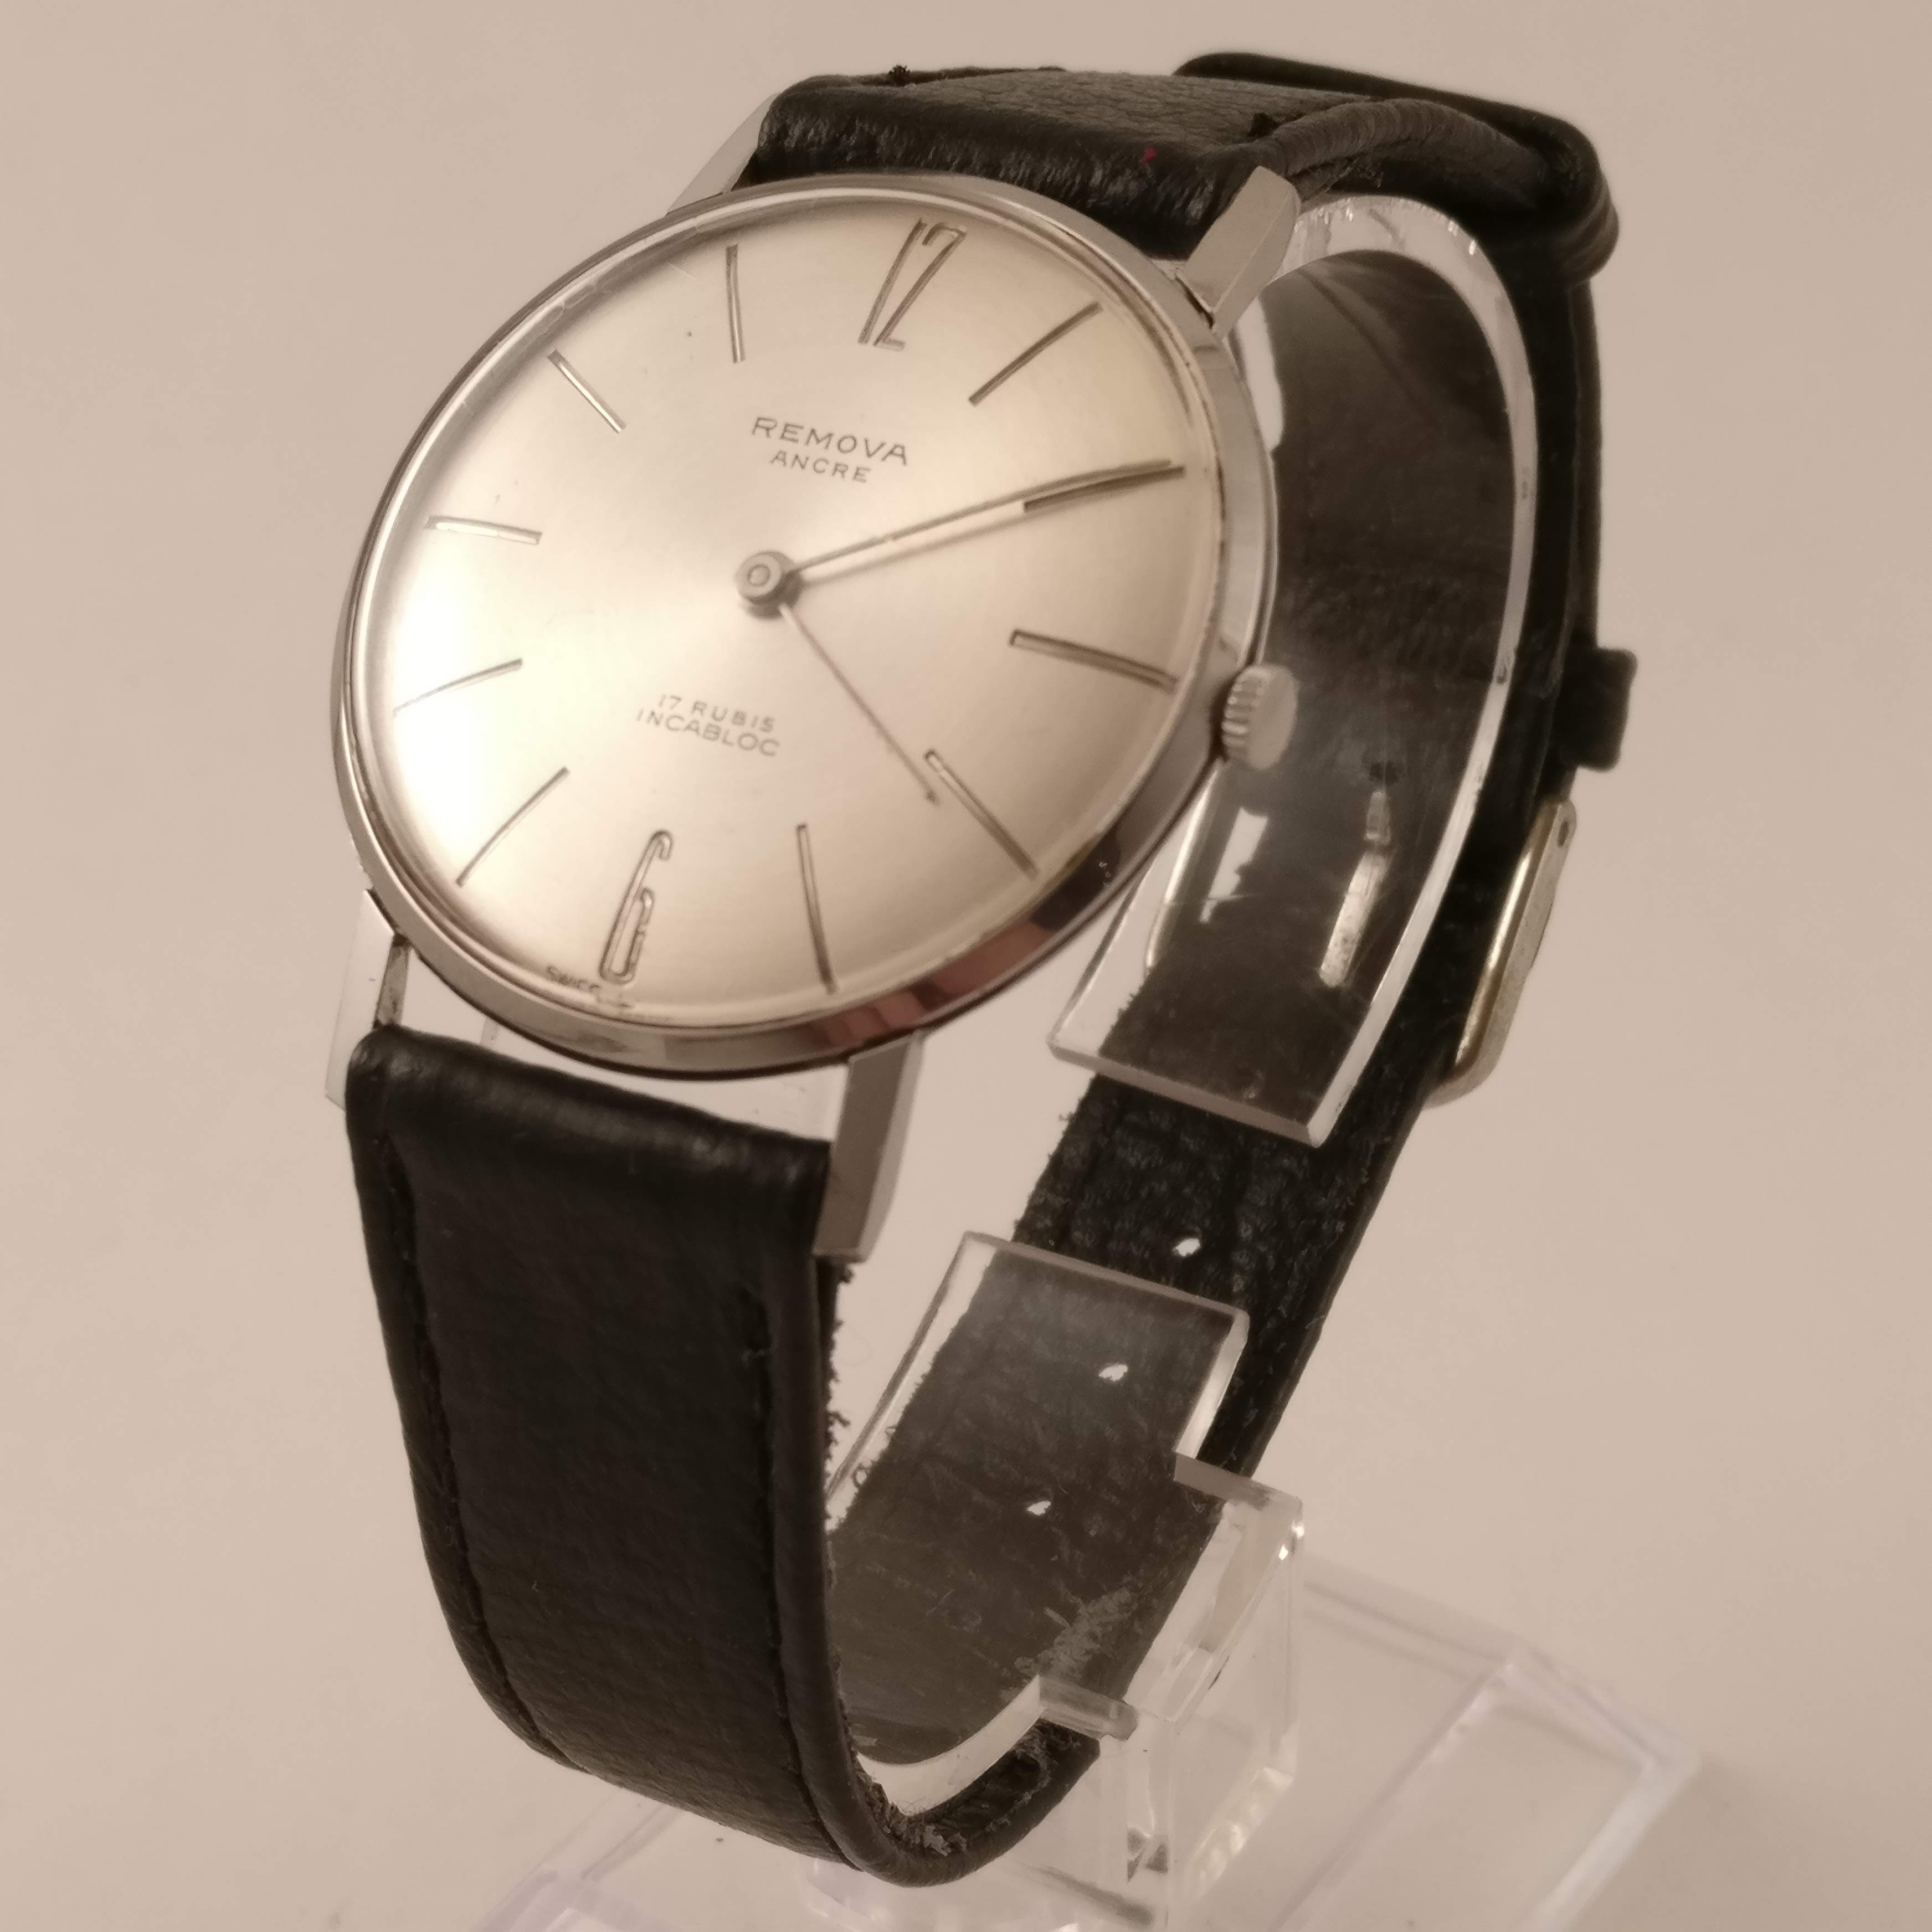 Voor type geest visie Vintage Horloges Heren | Online www.lactando.org